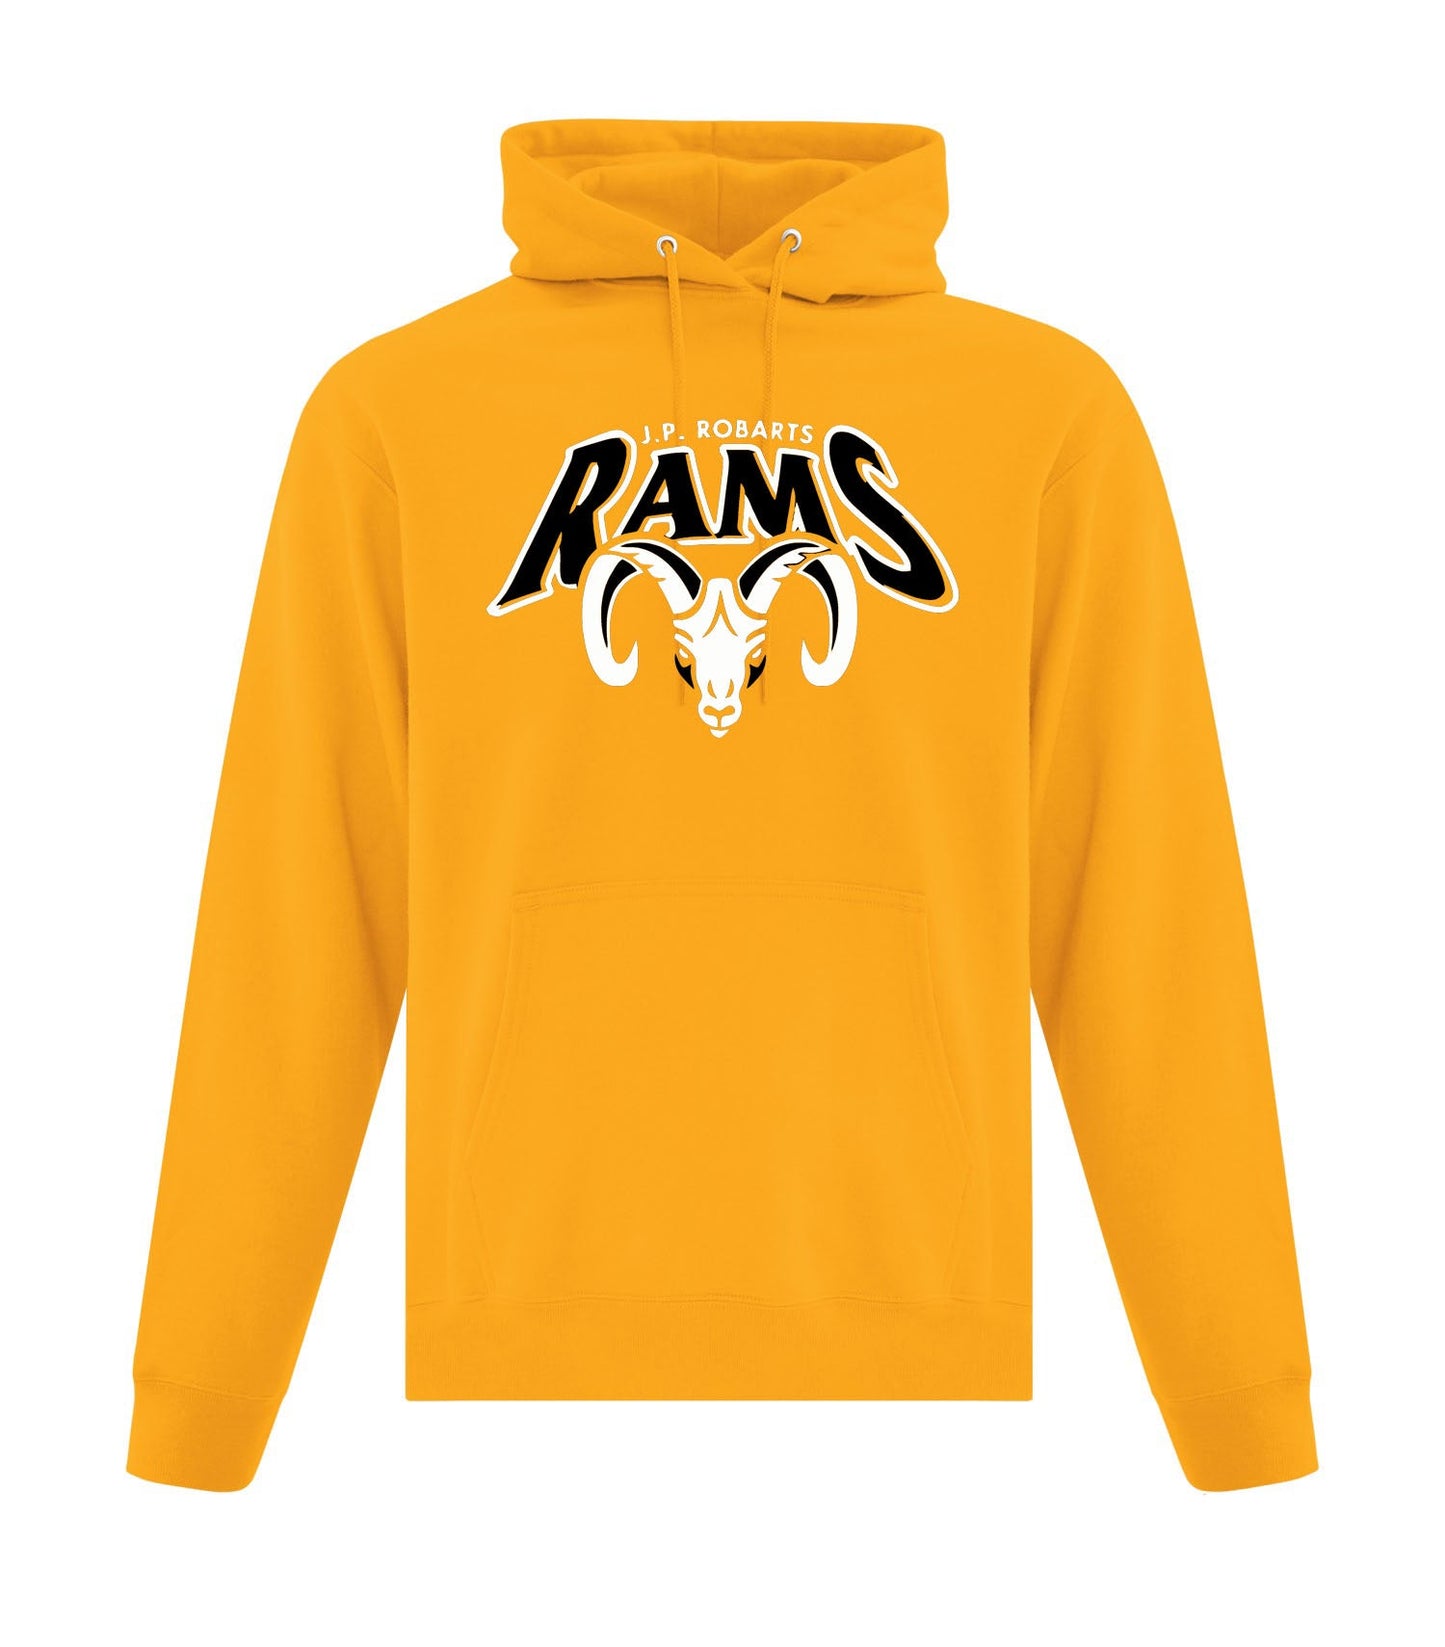 JP Robarts Rams Youth Fleece Hoodie